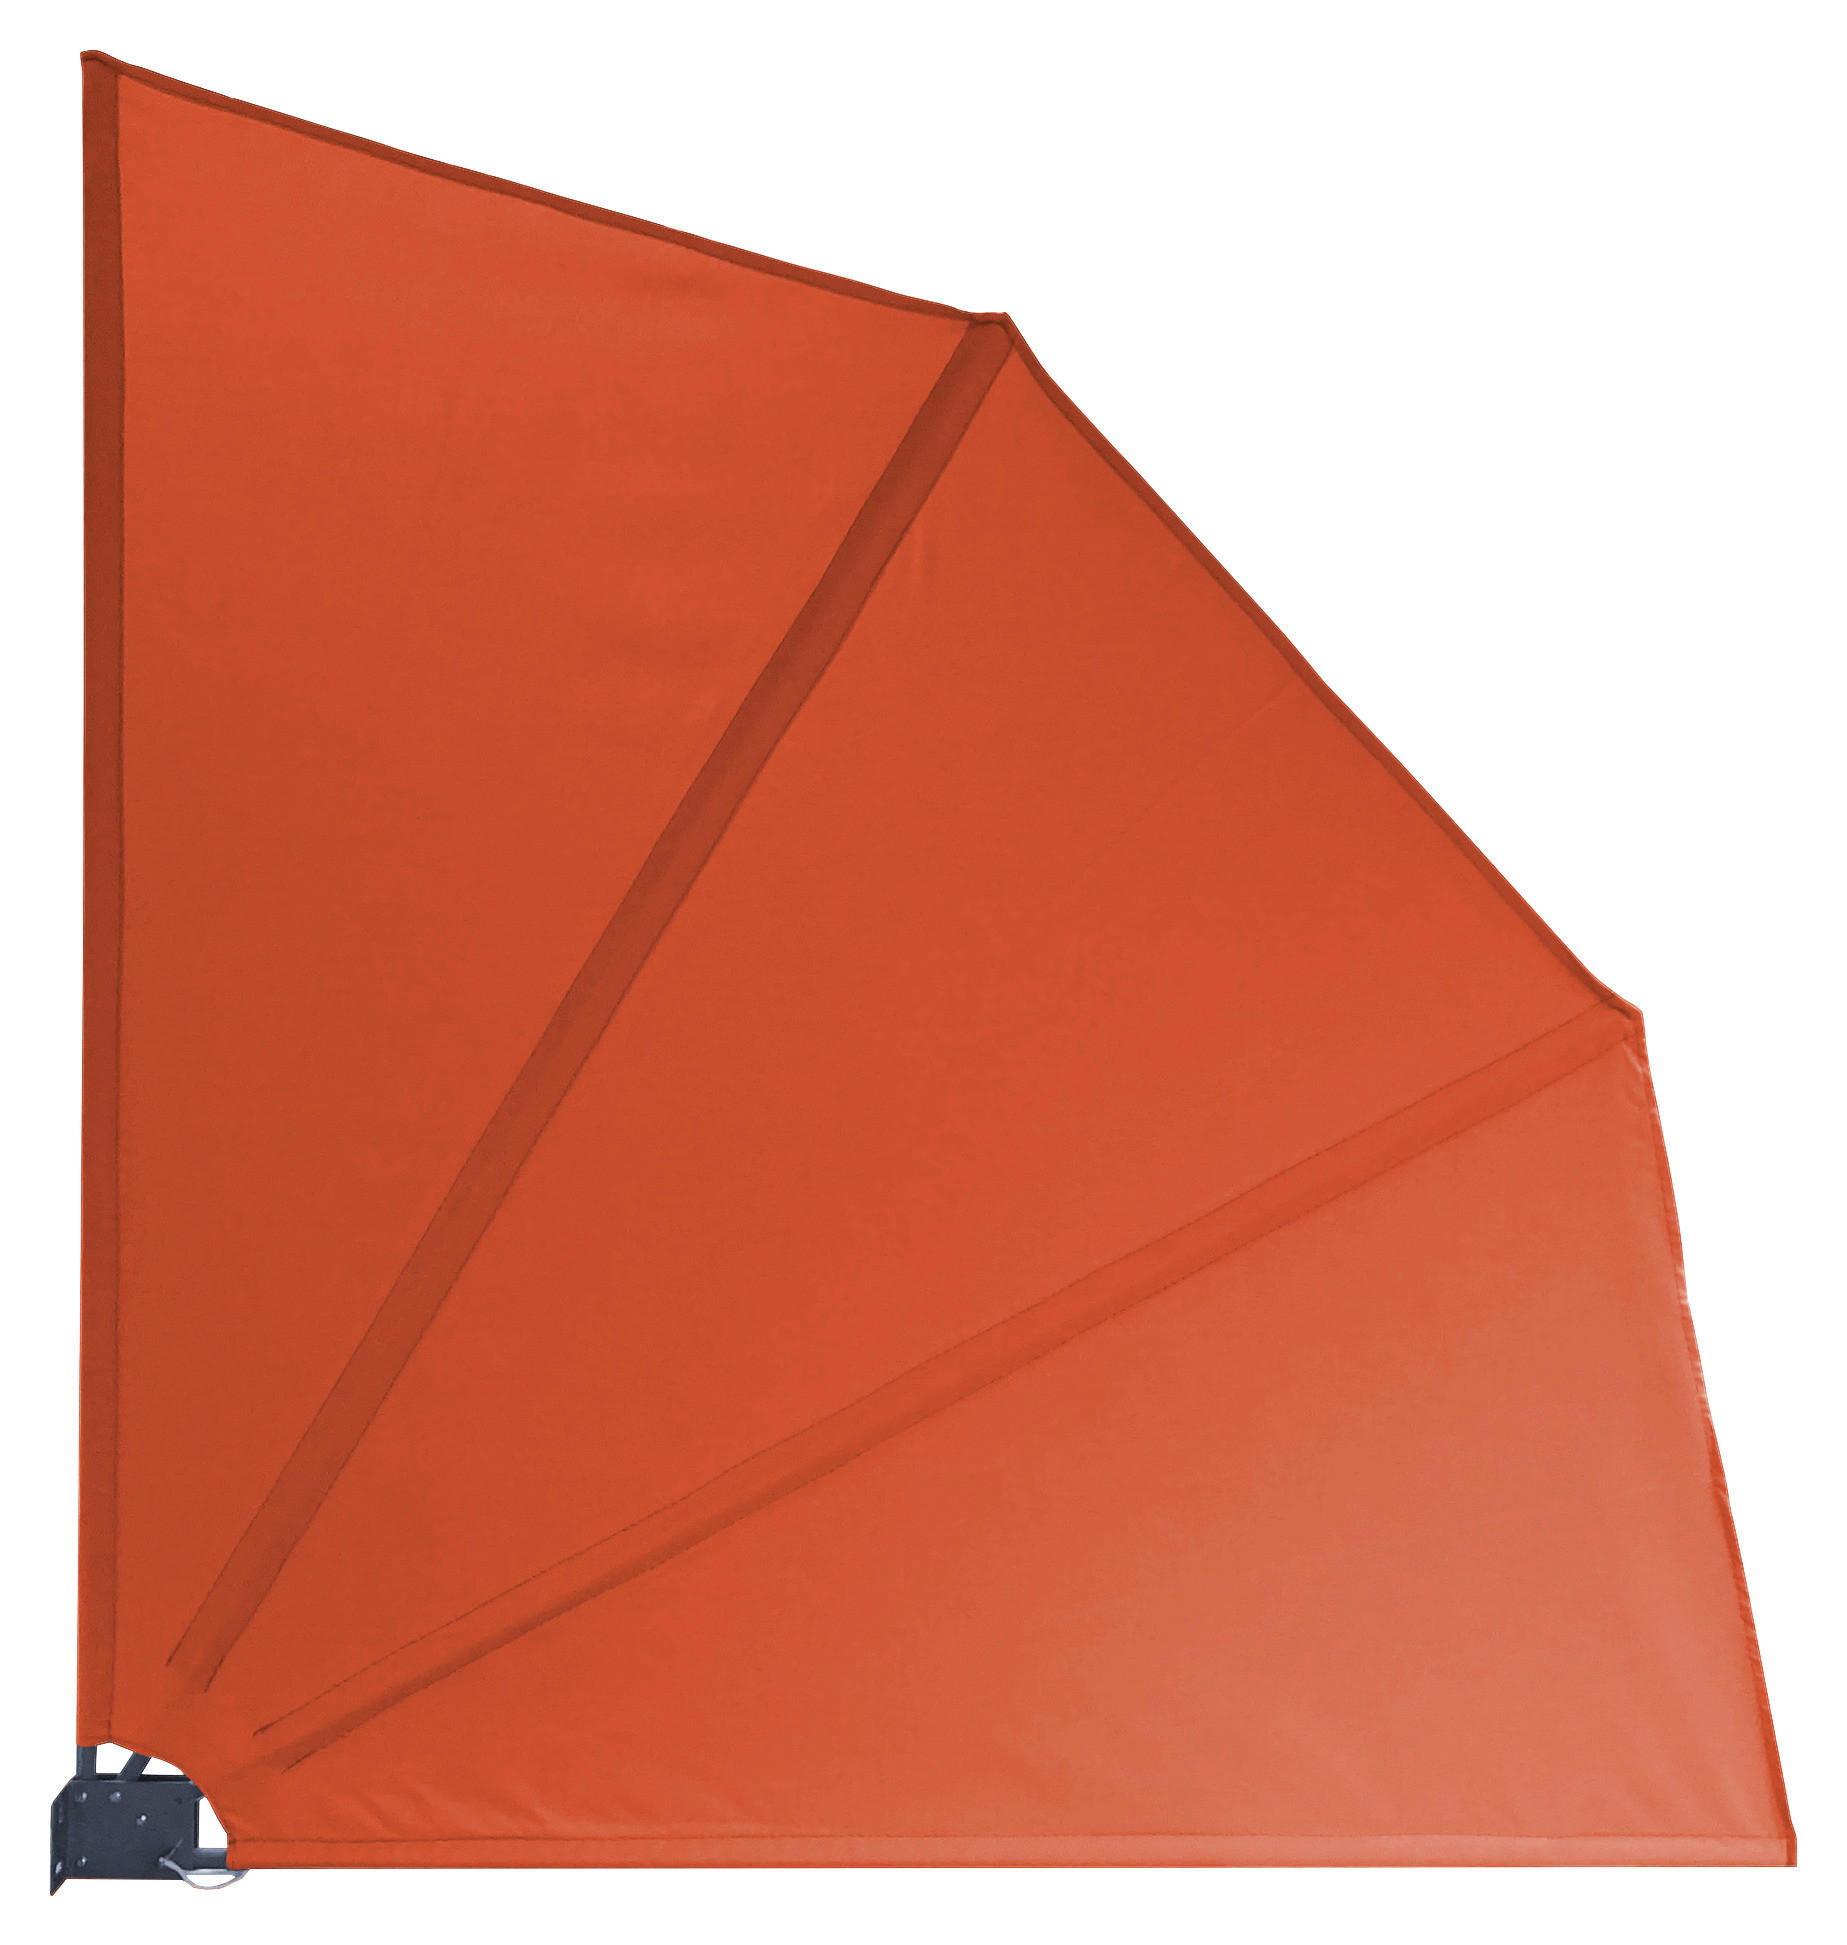 Grasekamp Balkonfächer orange Polyester-Mischgewebe B/L: ca. 140x140 cm Balkonfächer_140x140cm - orange (140,00/140,00cm)